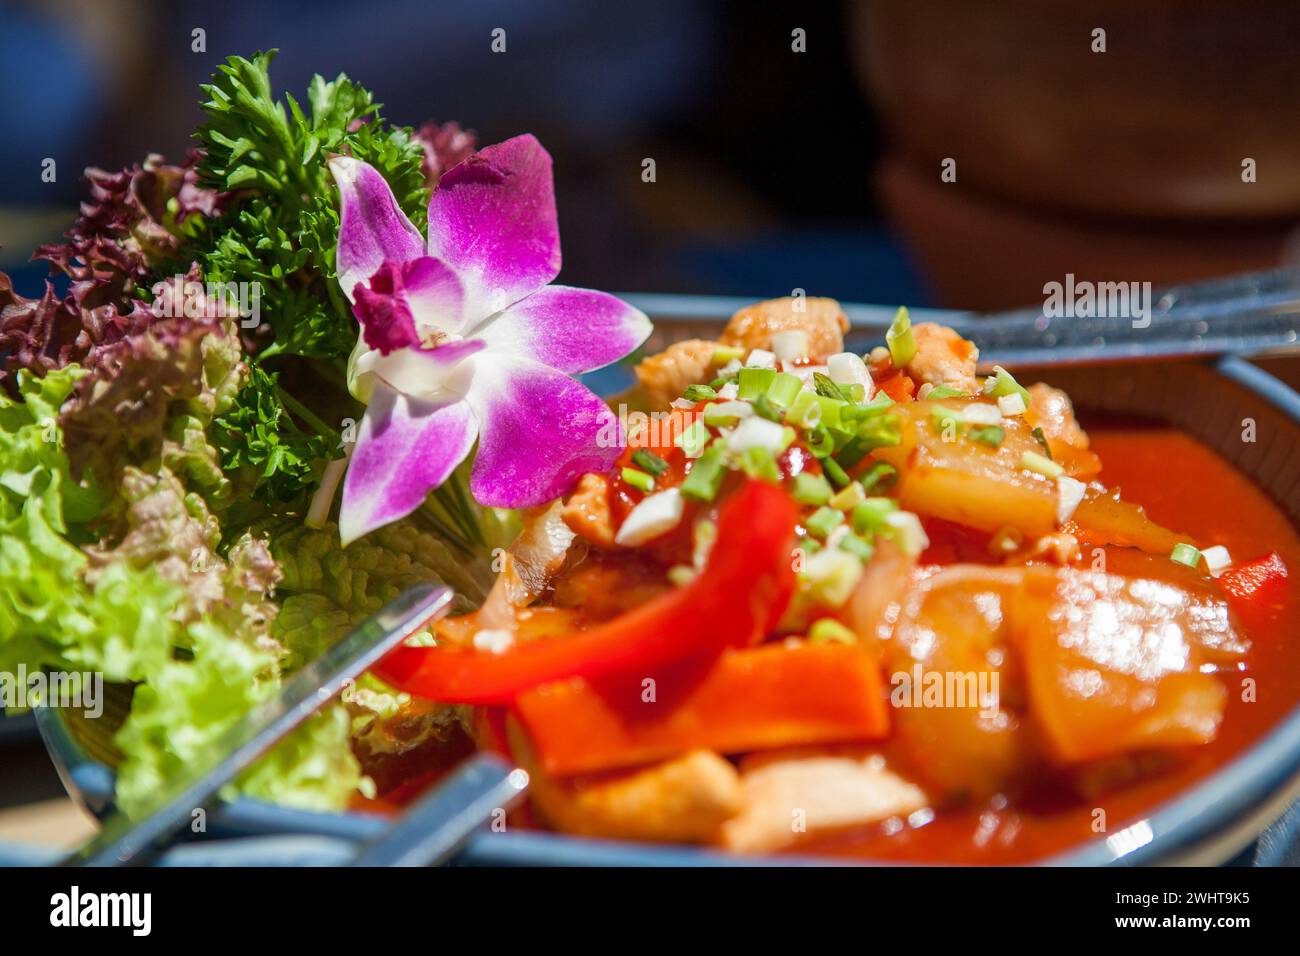 Exquisite Thai Culinary Art: Vibrant Thai Dish with Pink Flower Garnish Stock Photo